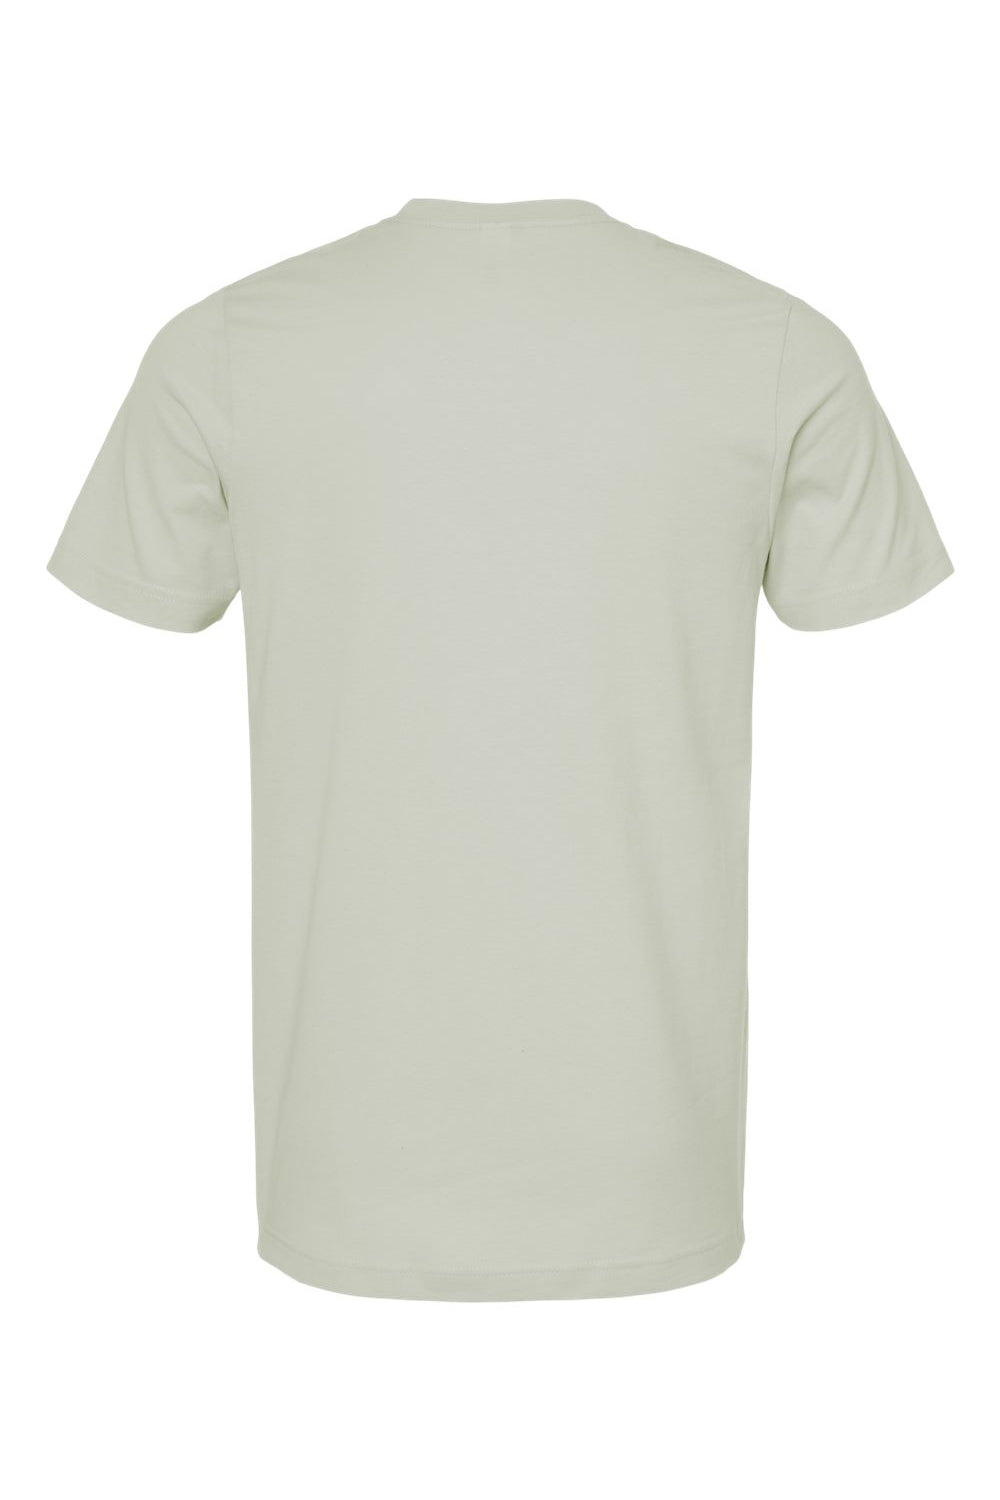 Tultex 602 Mens Short Sleeve Crewneck T-Shirt Light Silver Grey Flat Back